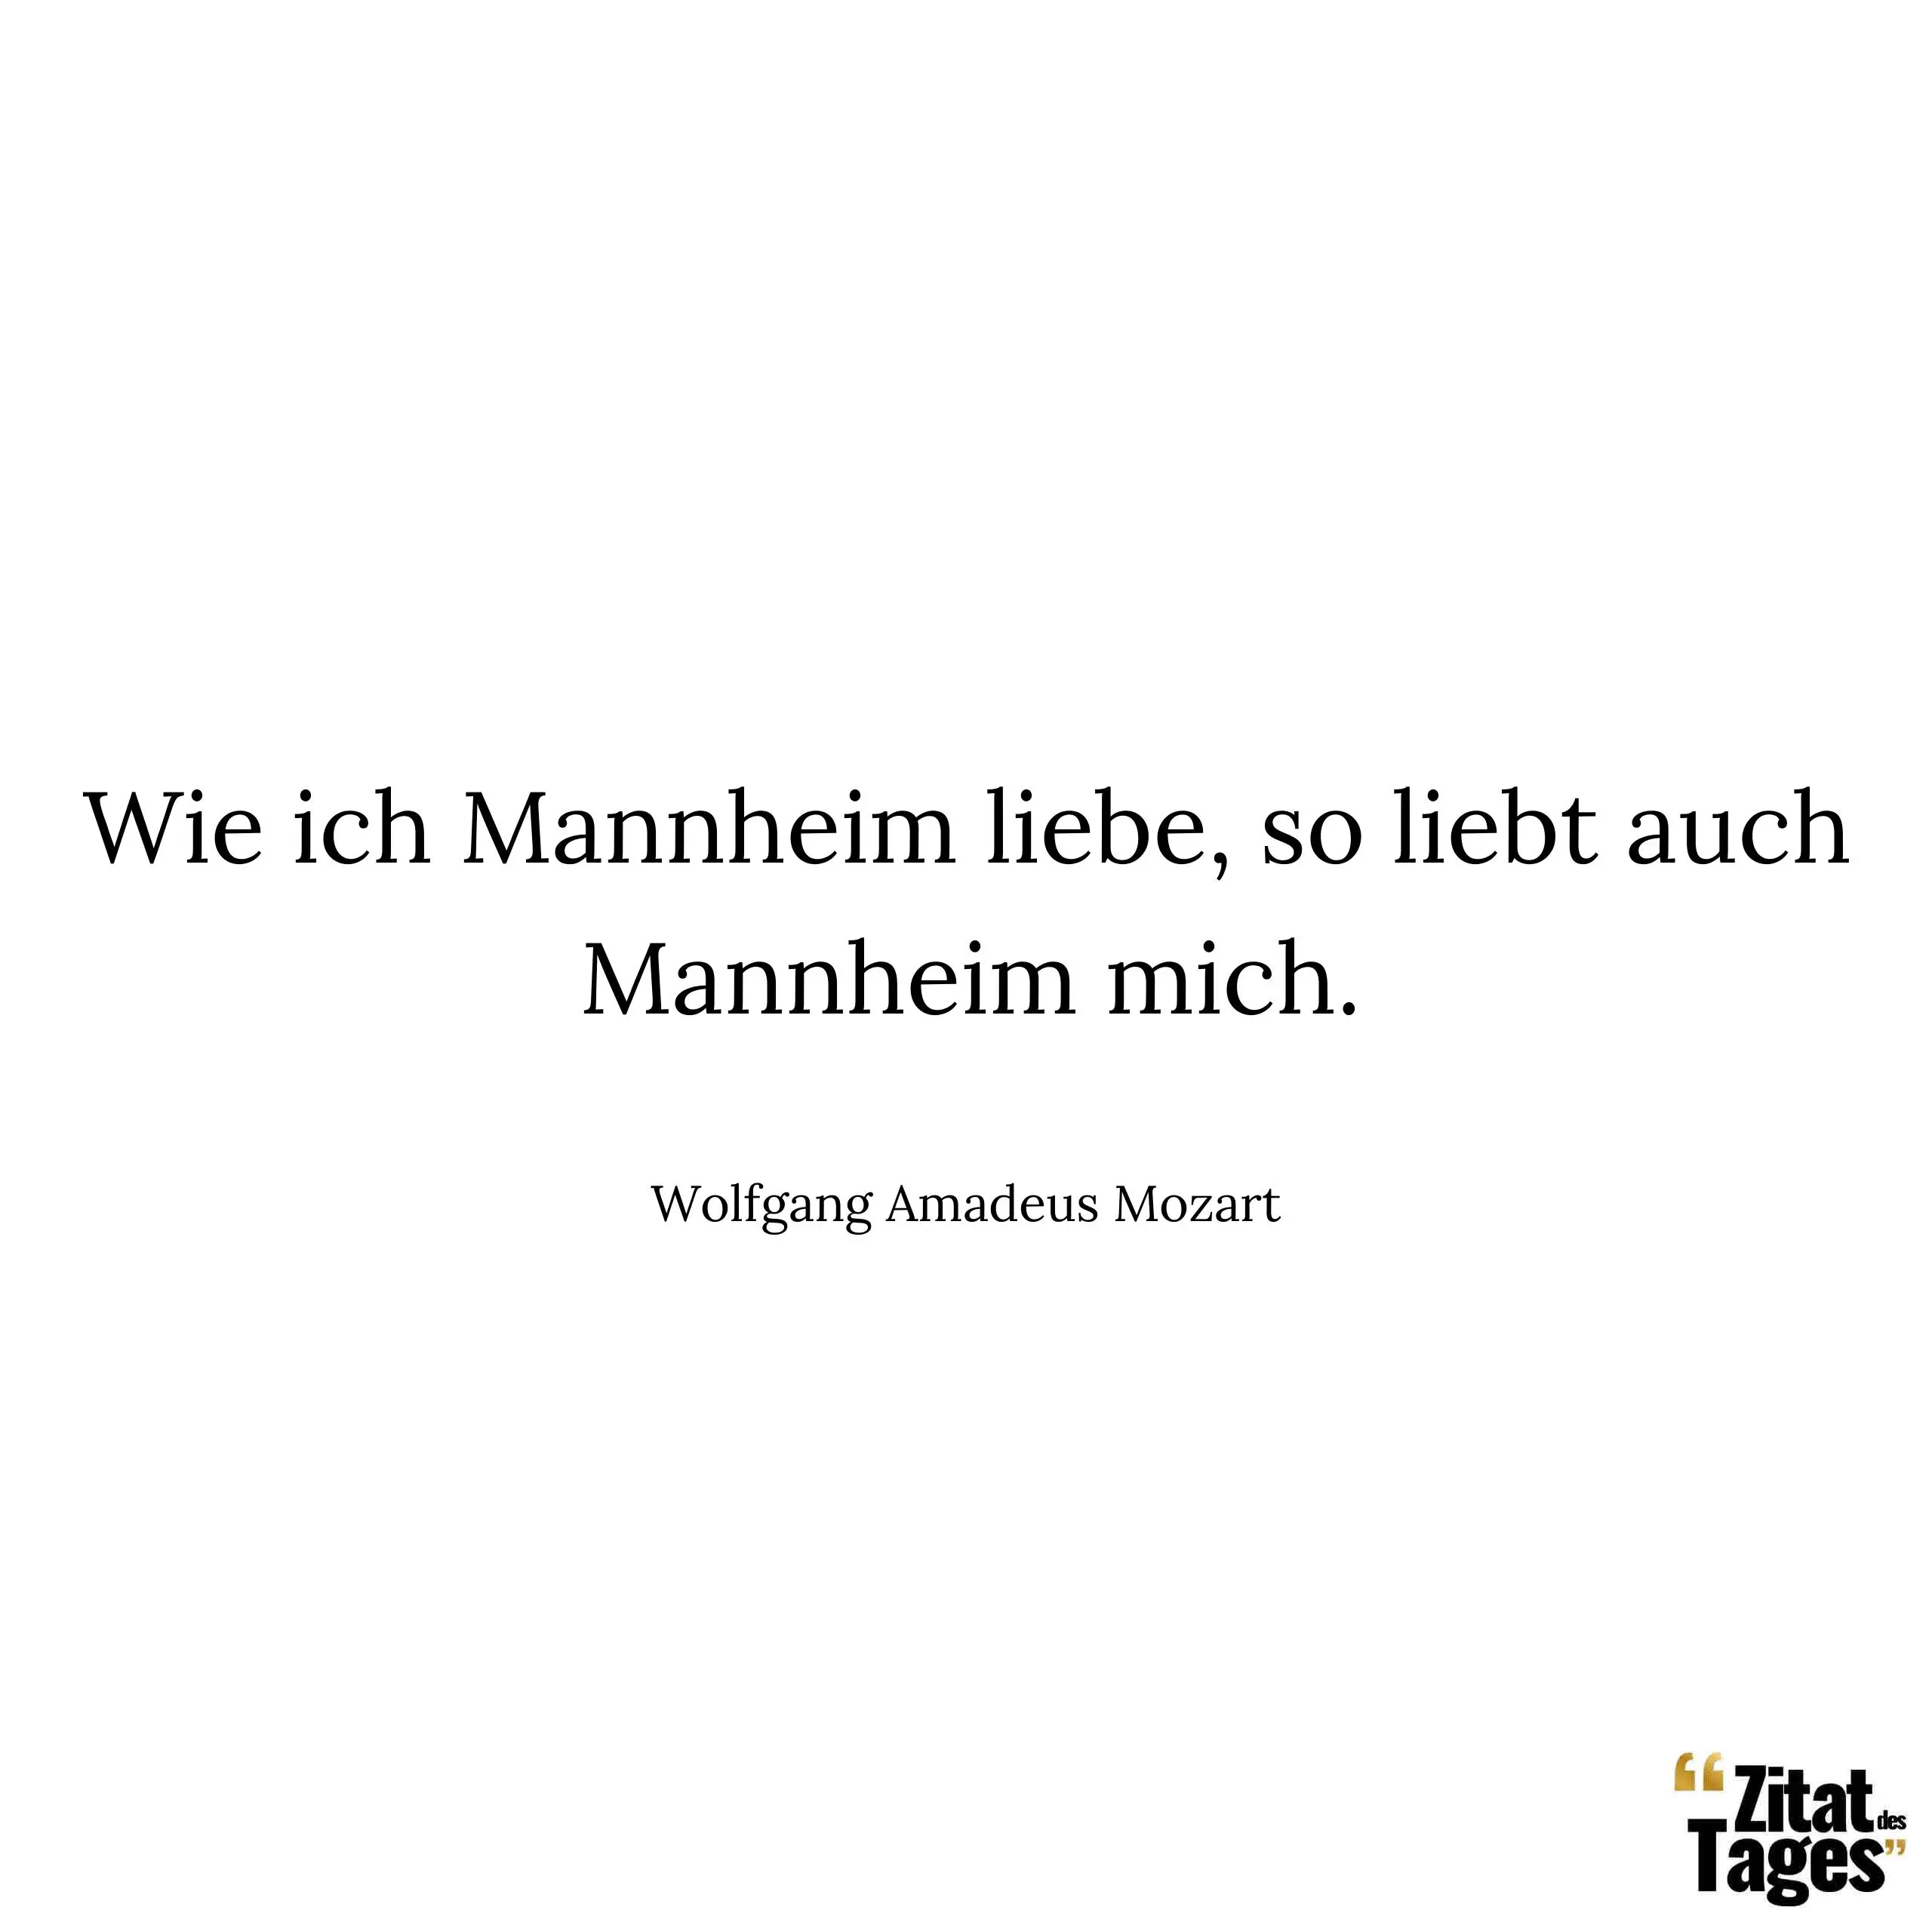 Wie ich Mannheim liebe, so liebt auch Mannheim mich. - Wolfgang Amadeus Mozart